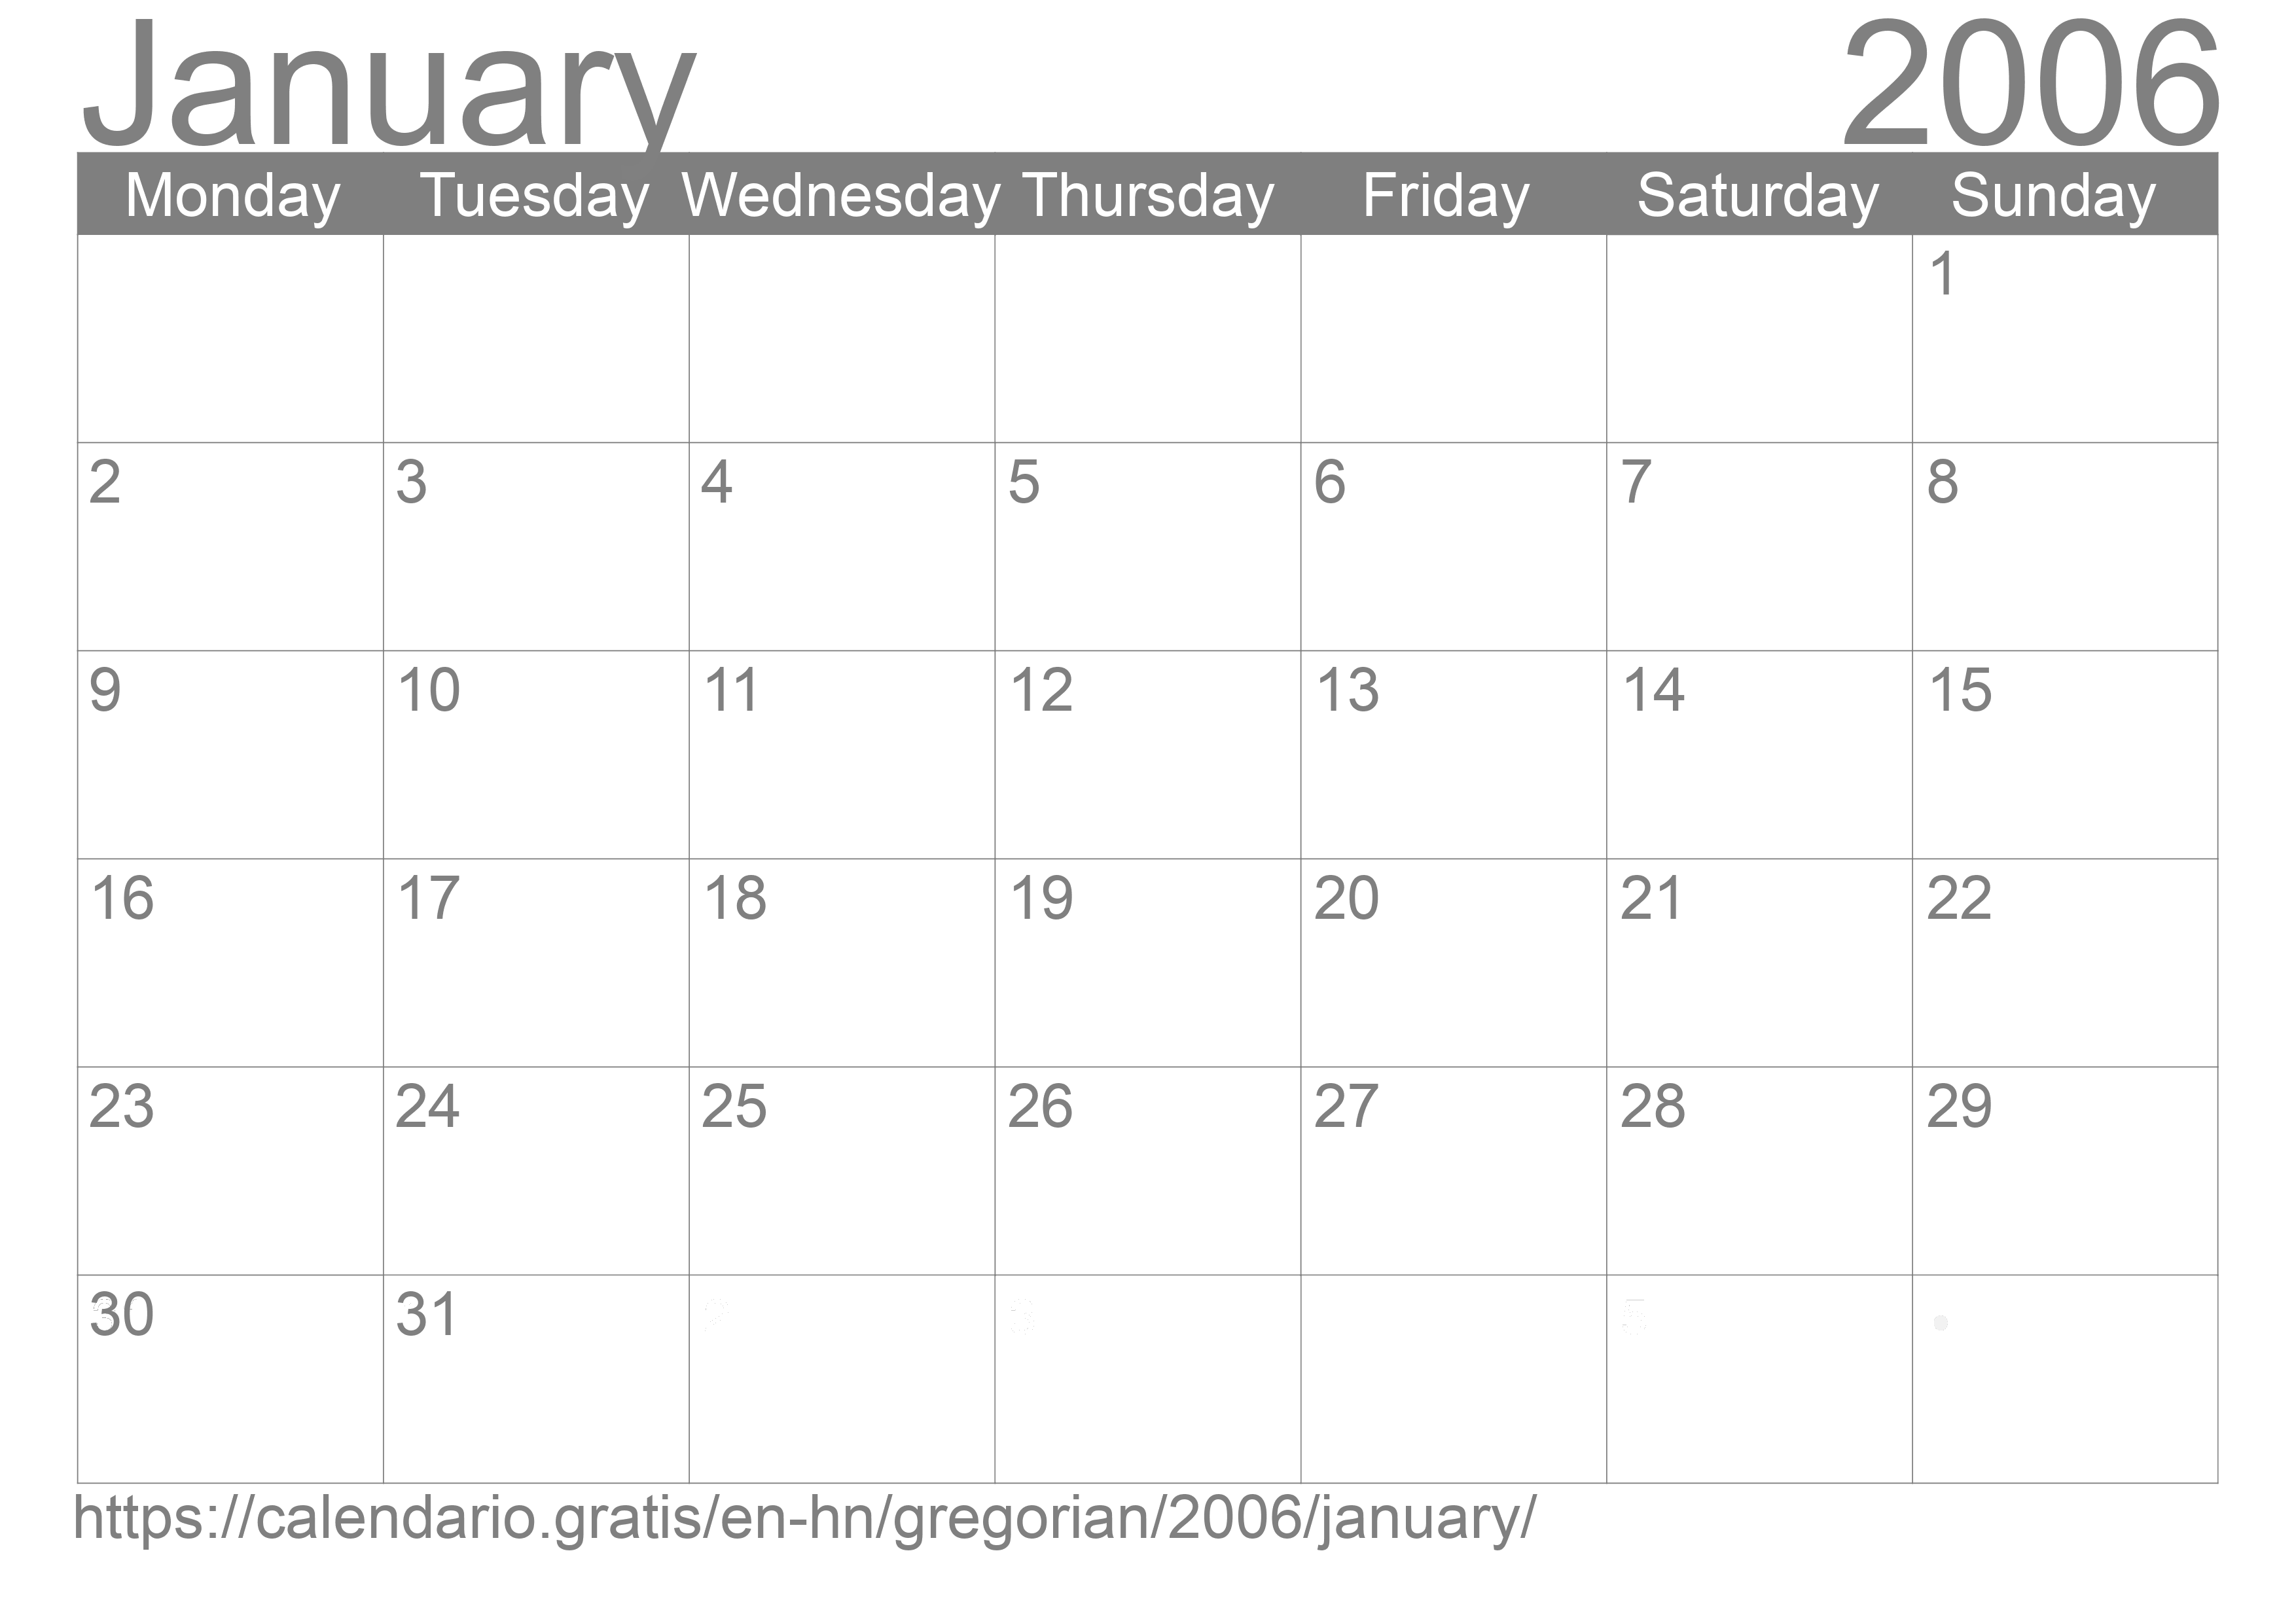 Calendar January 2006 to print